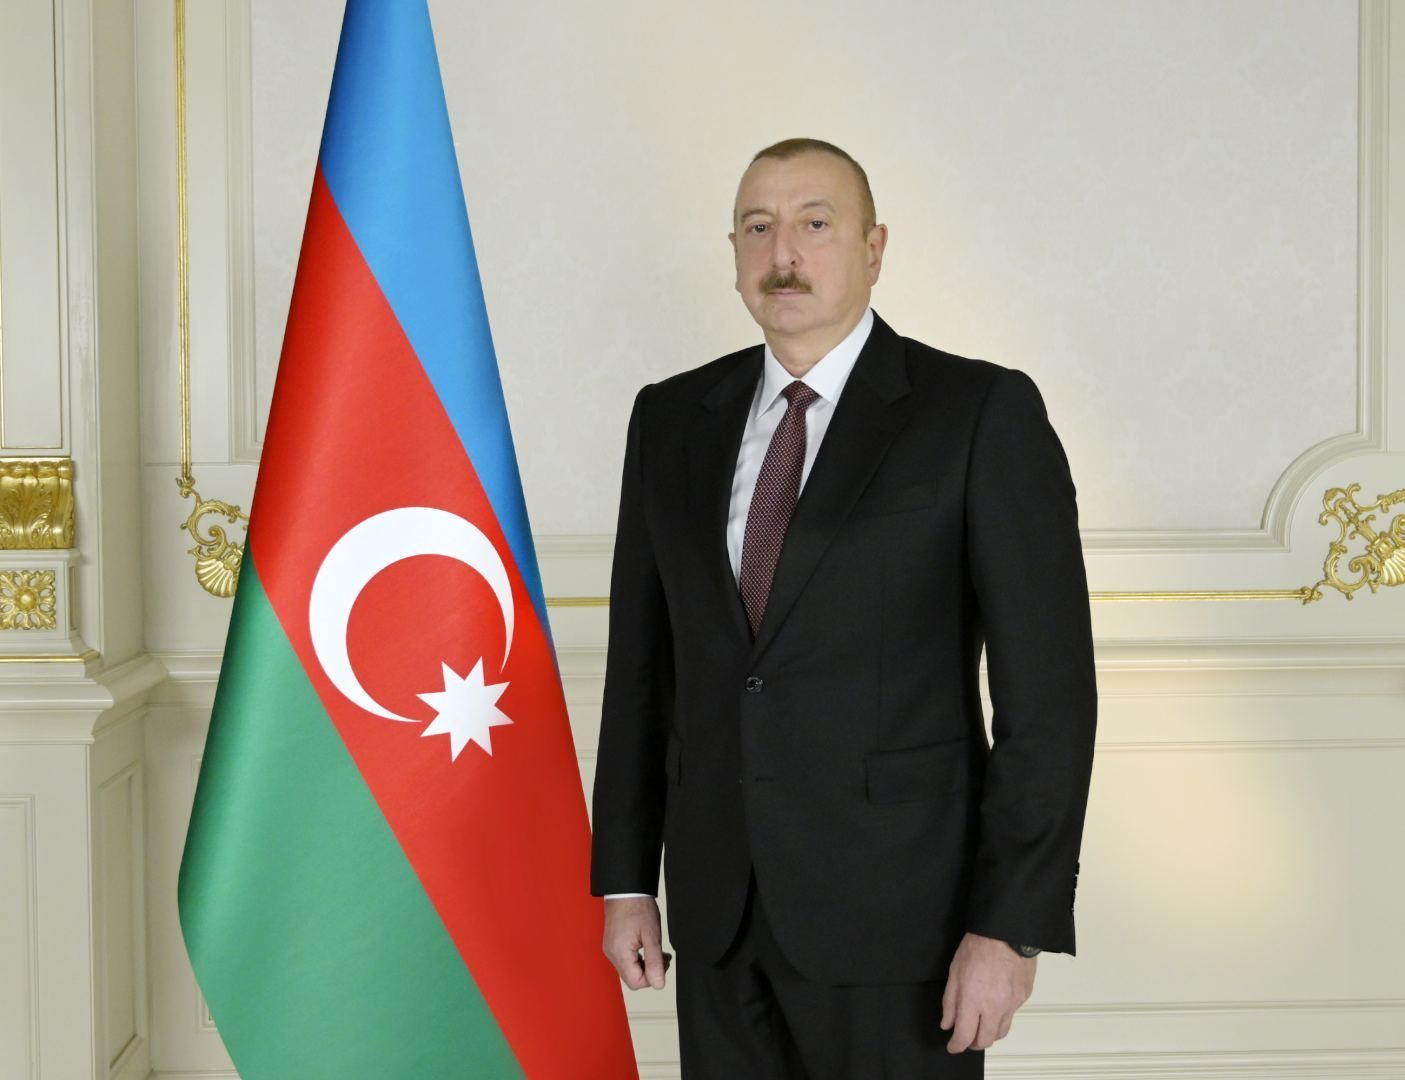 PM of Croatia sends congratulatory letter to President Ilham Aliyev